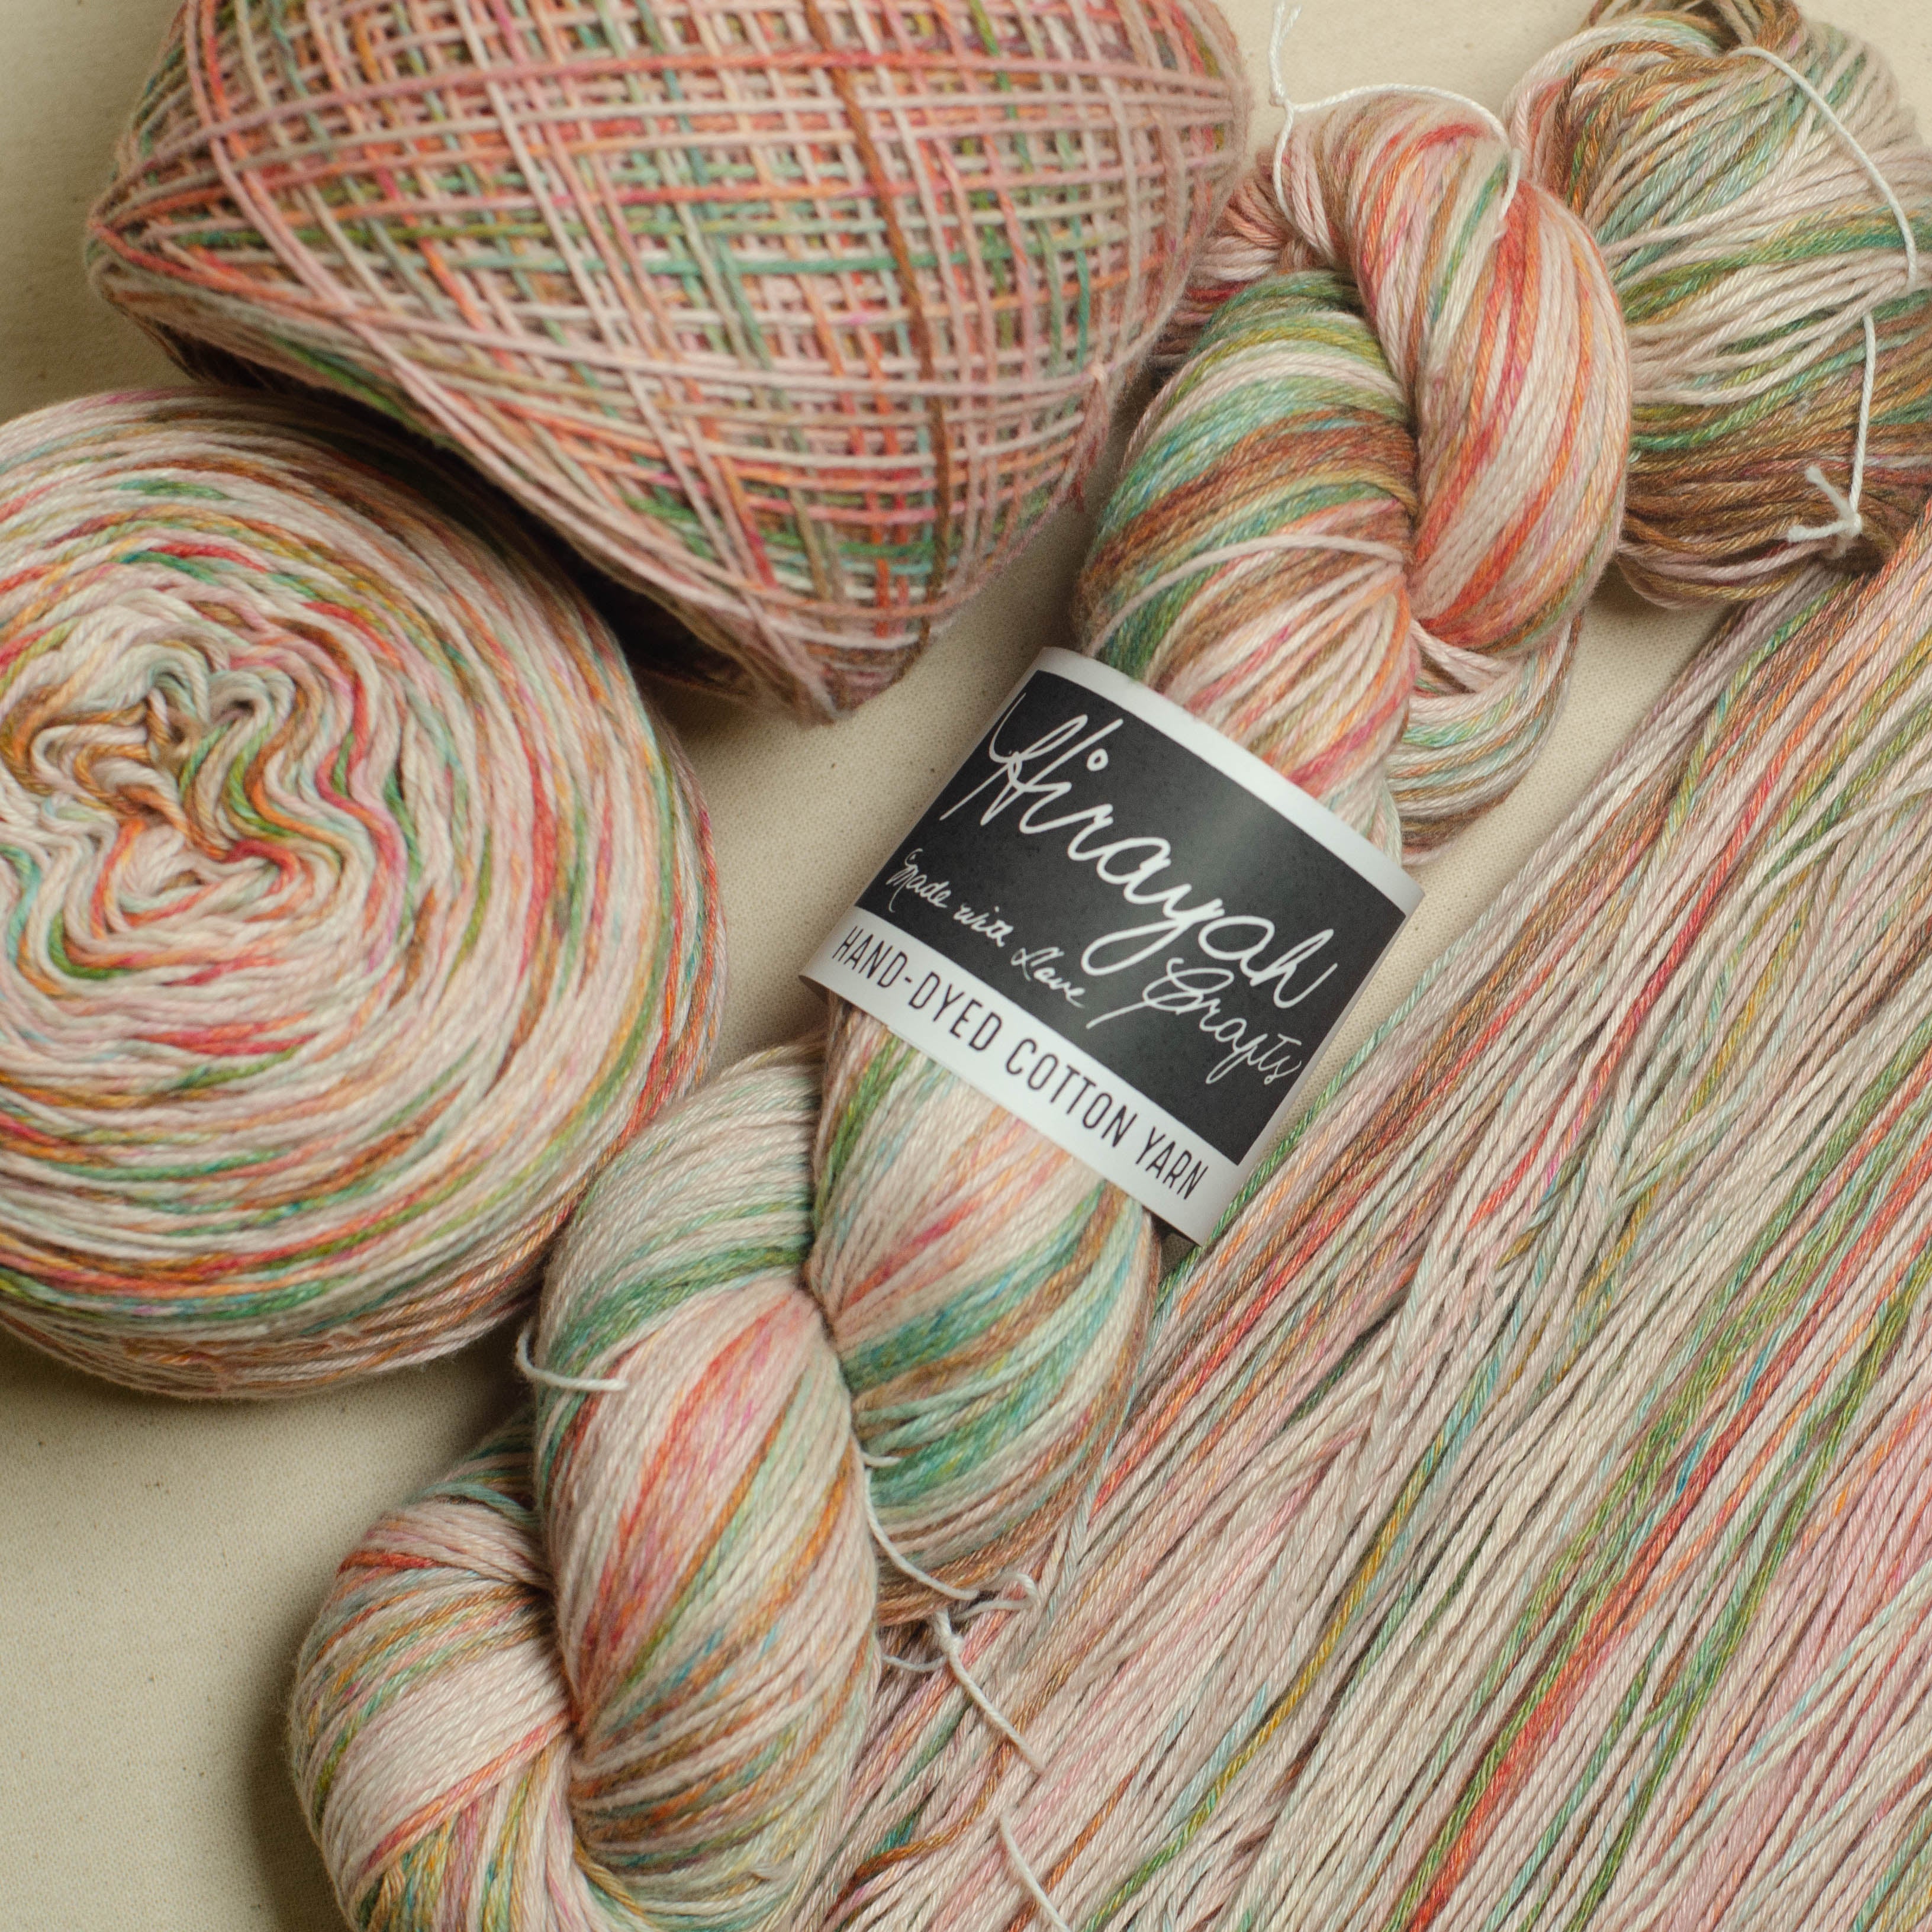 HOBIYARN Natural Sheep Wool Yarn Knitting Crochet DIY Craft Hobby  100g/150m